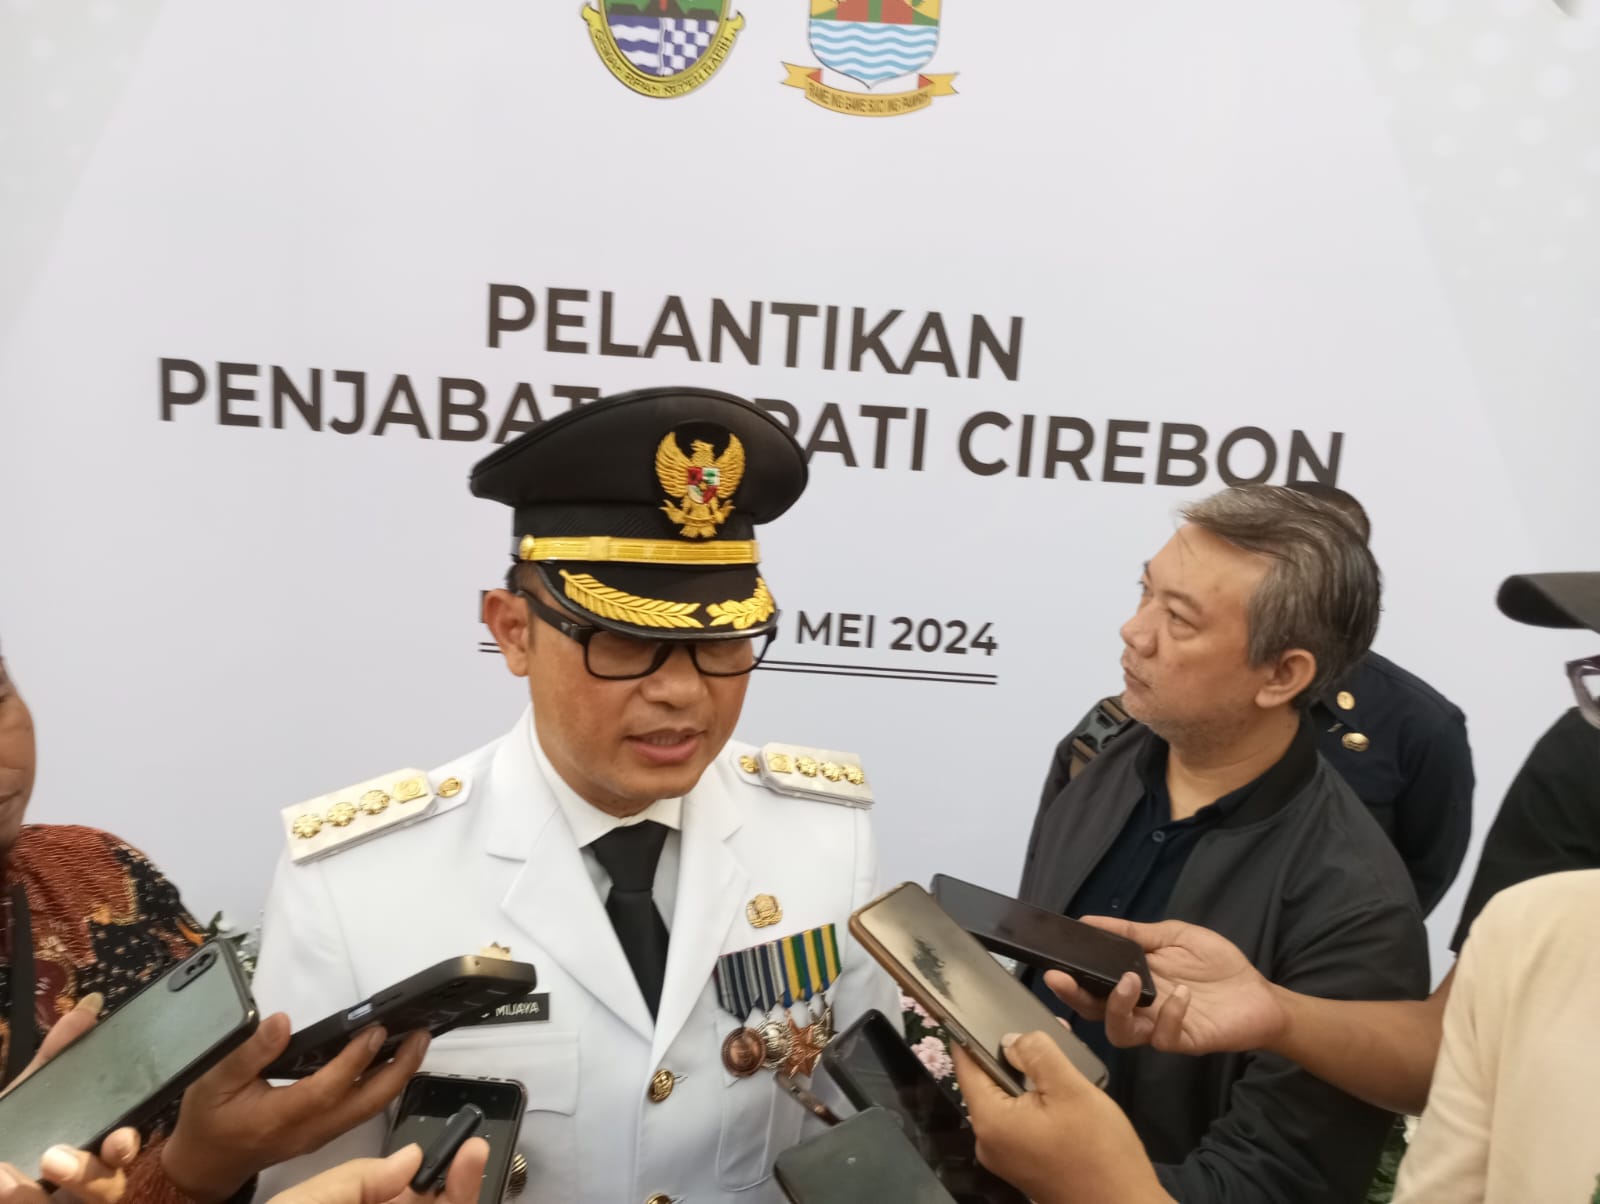 Penjabat Bupati Cirebon Wahyu Mijaya Tetap Berkomitmen Monitor Pelaksanaan PPDB 2024 di Jawa Barat